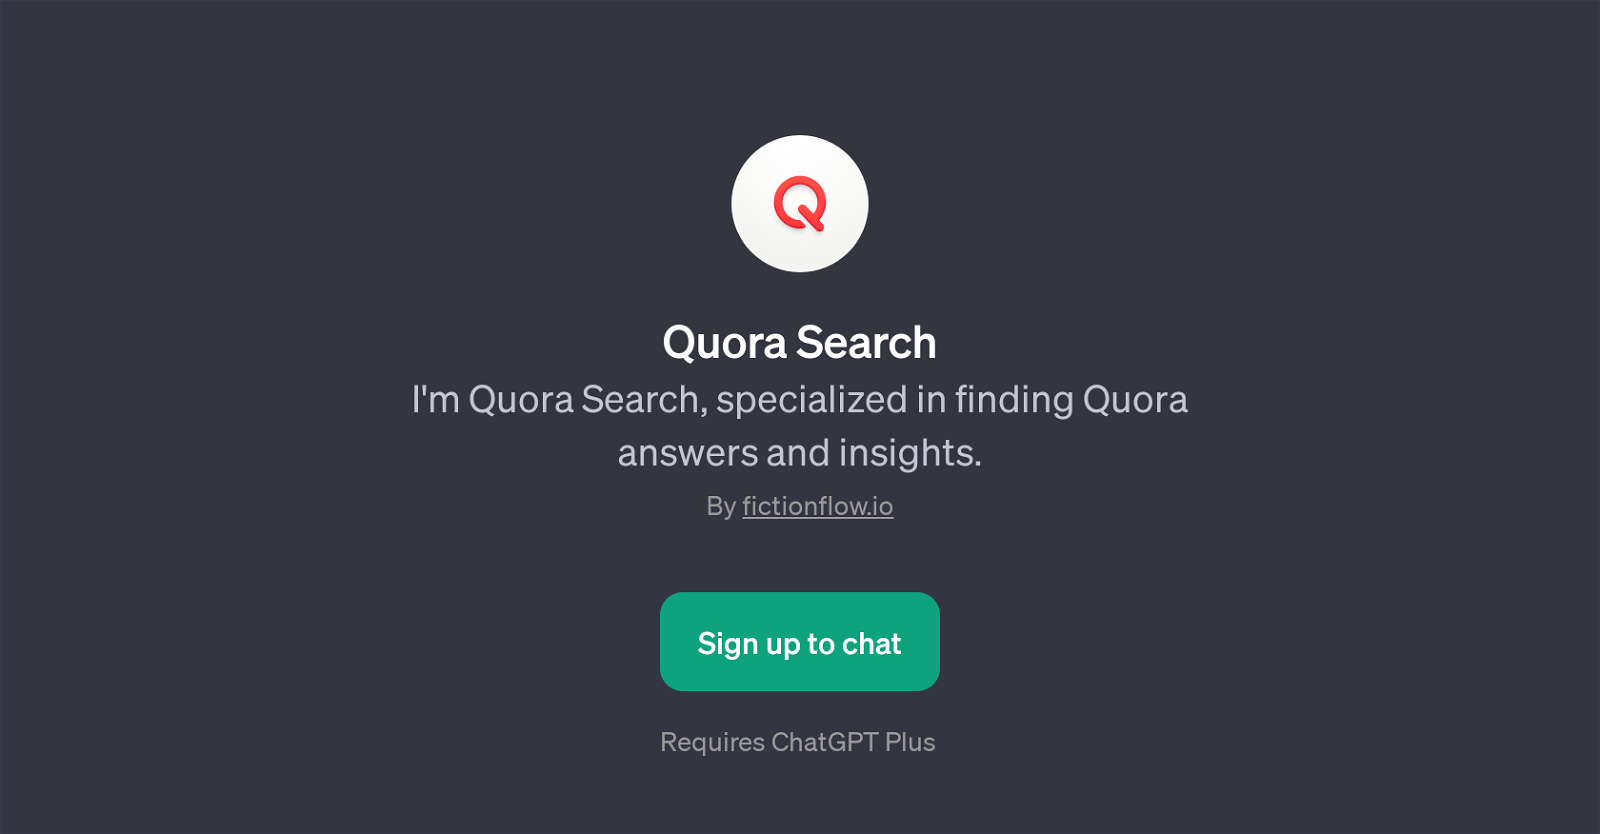 Quora Search website